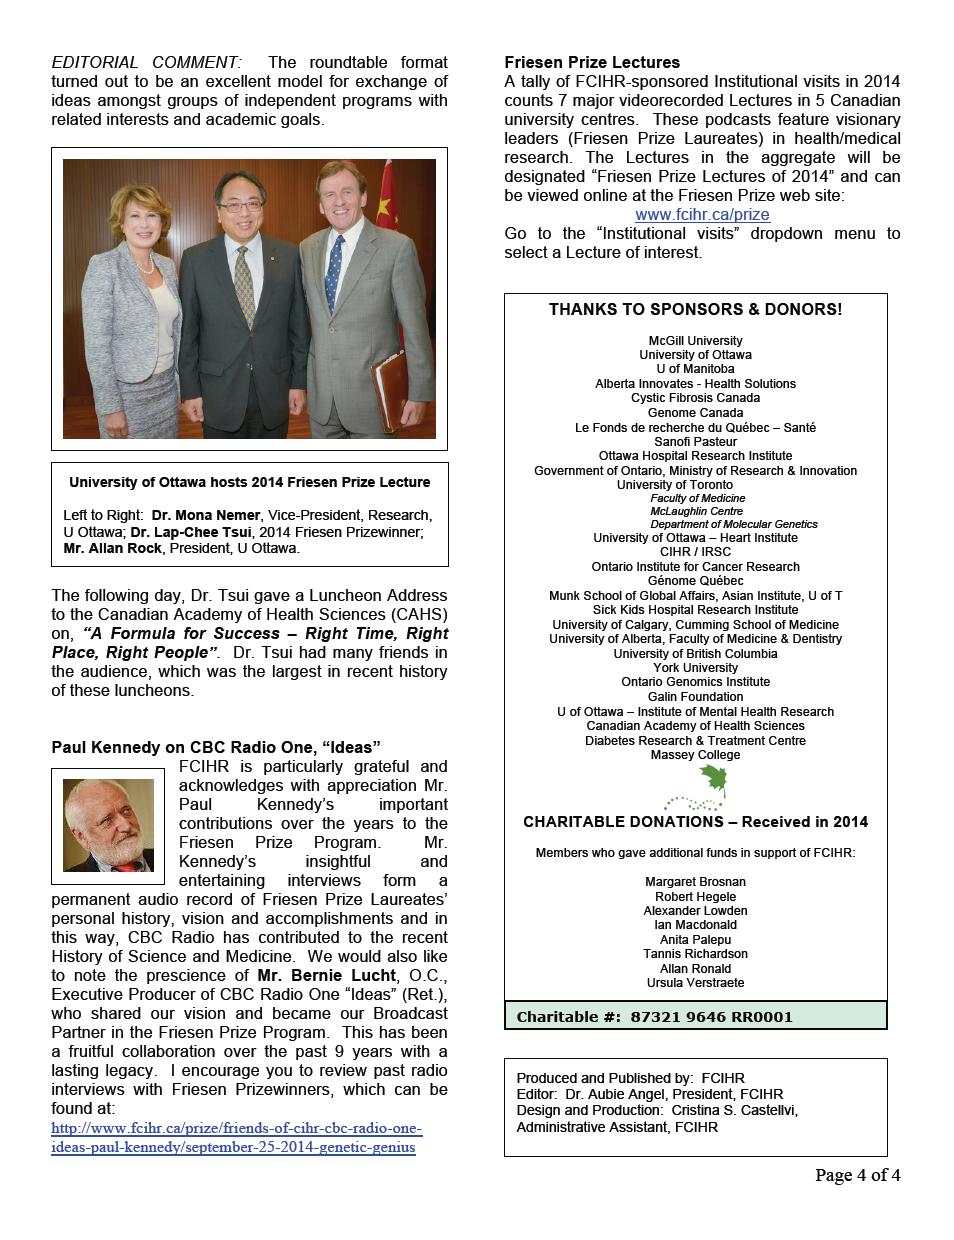 Page 4 - JPG - 2014 Spotlight Newsletter - FCIHR